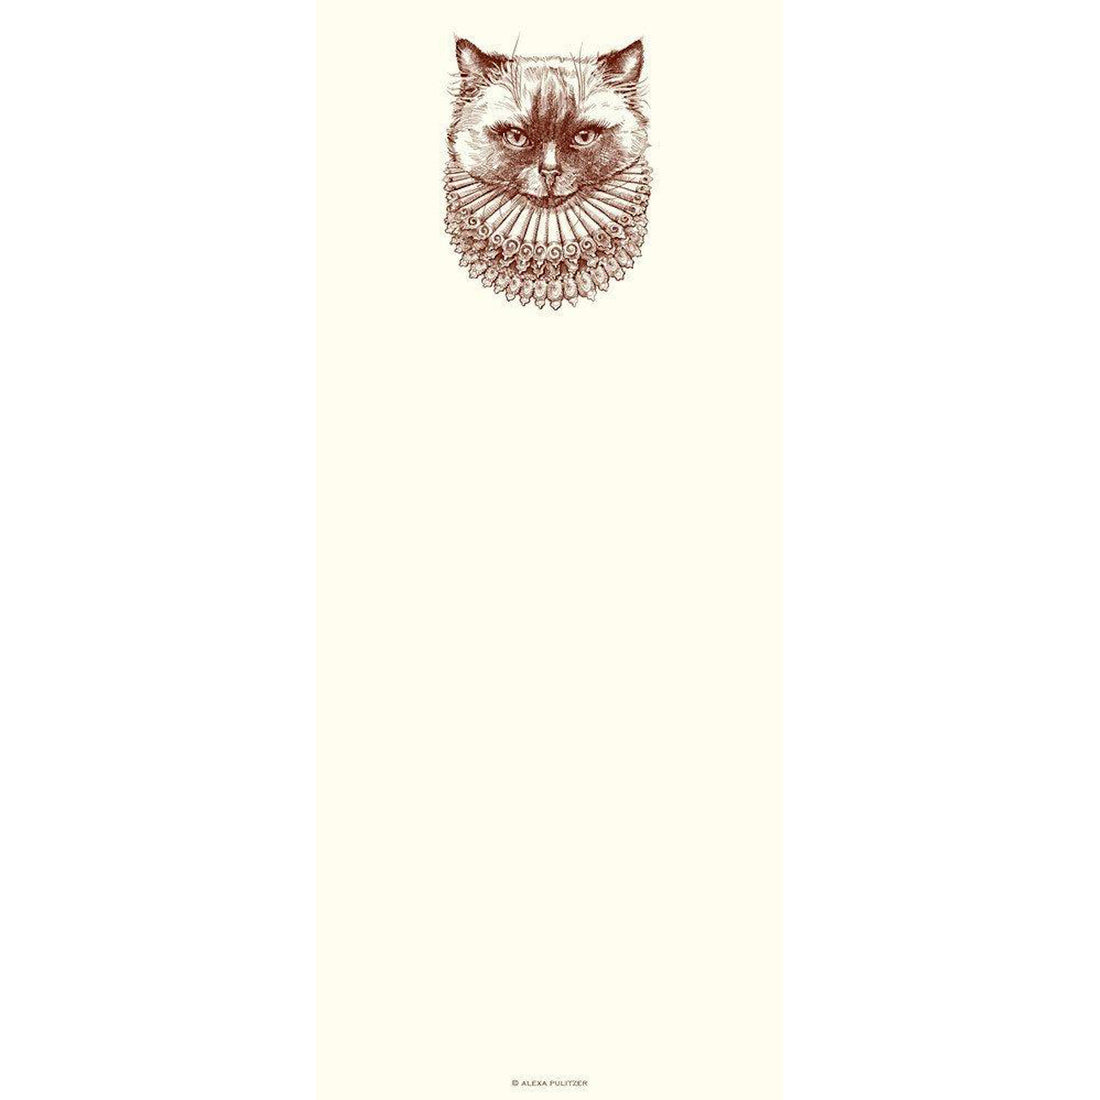 Illustration of a detailed sketched cat&